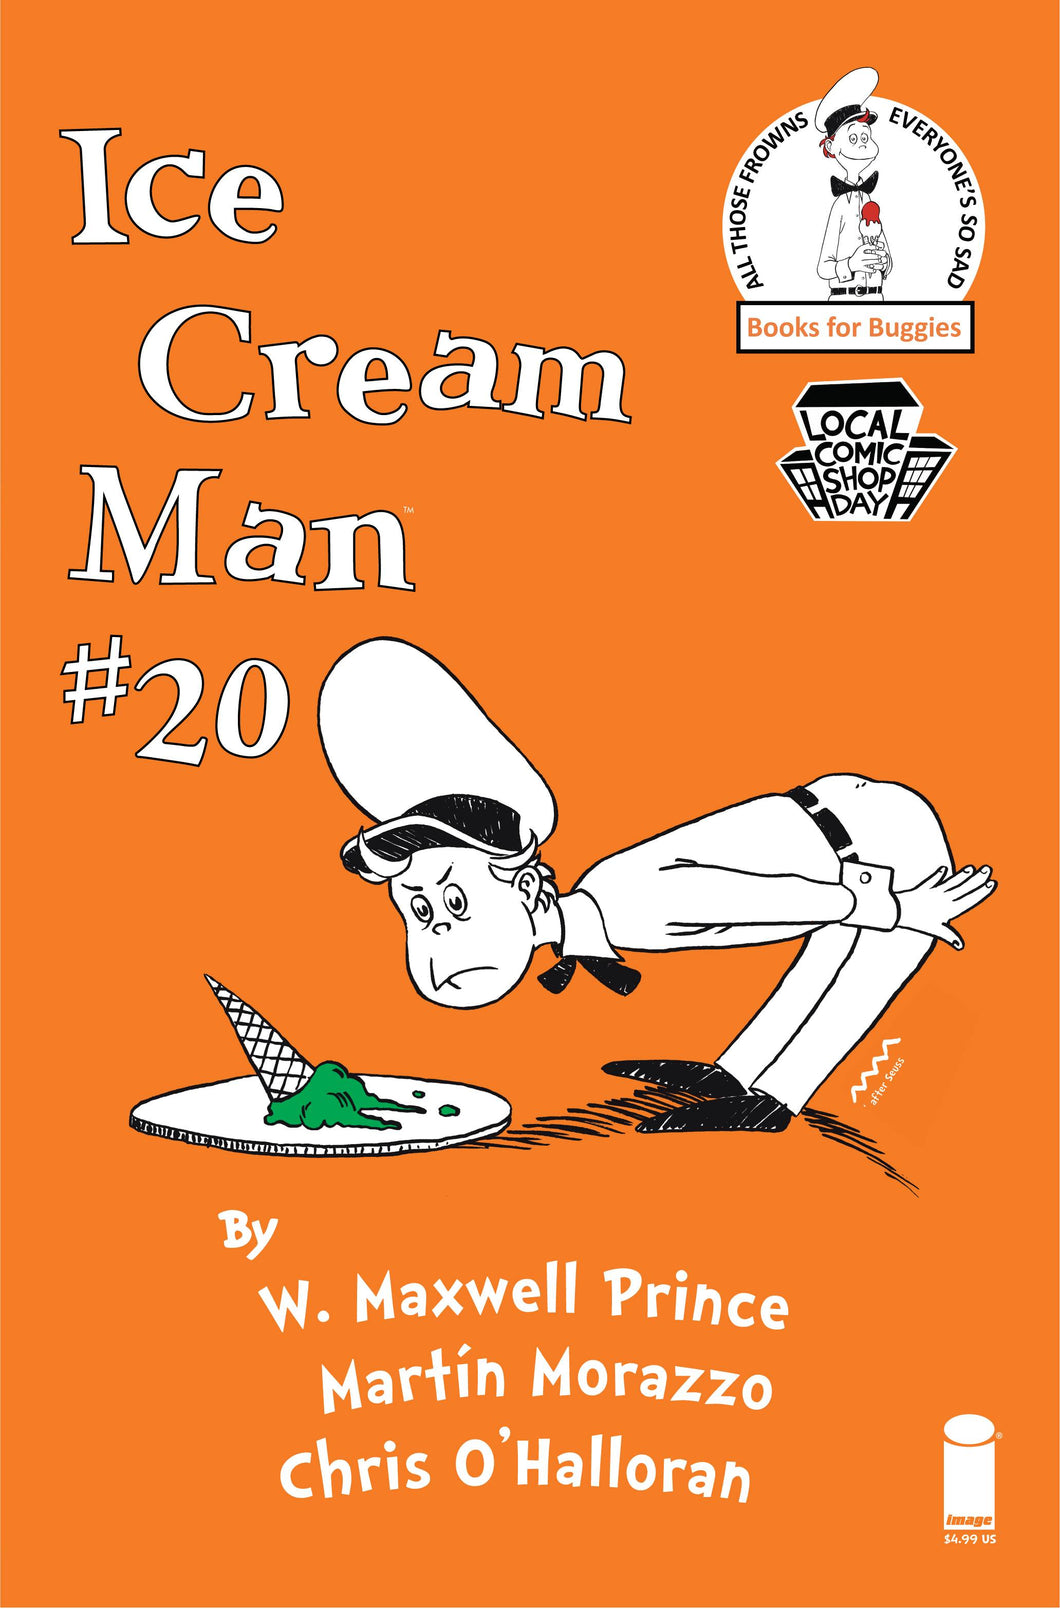 LCSD 2020 – Ice Cream Man #20